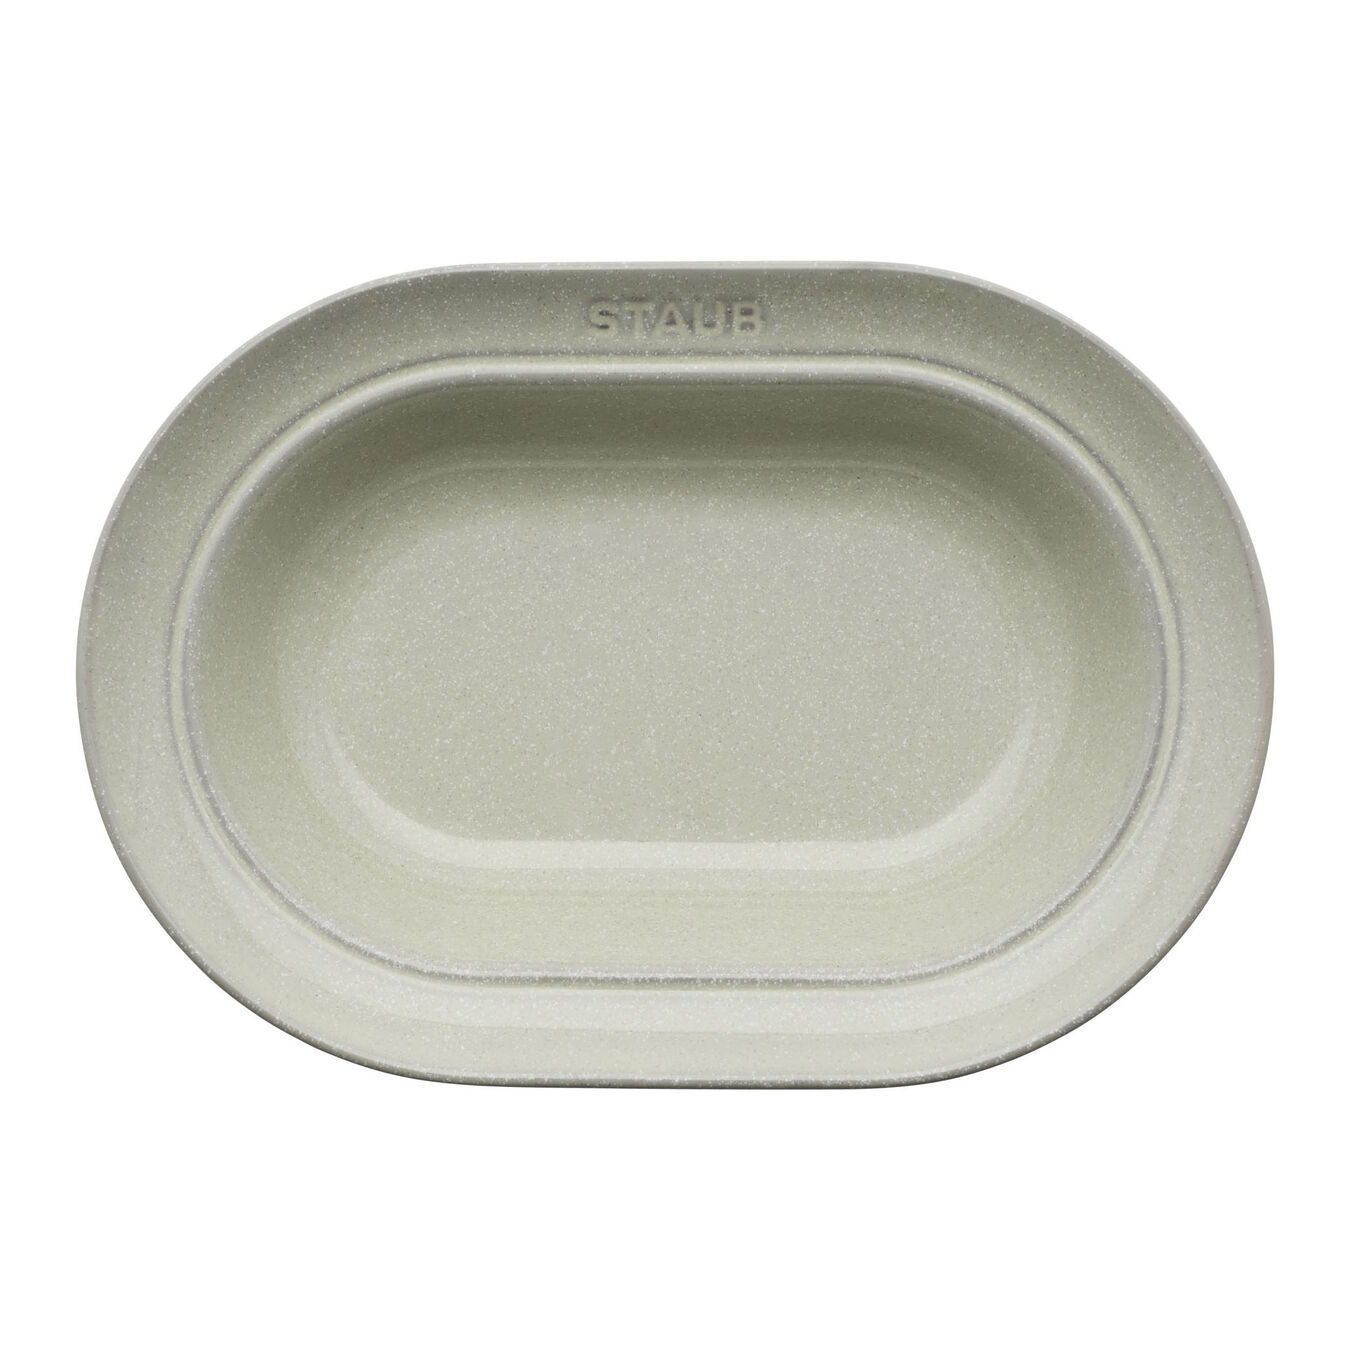 25 cm ceramic oval Serving Dish, white truffle,,large 2